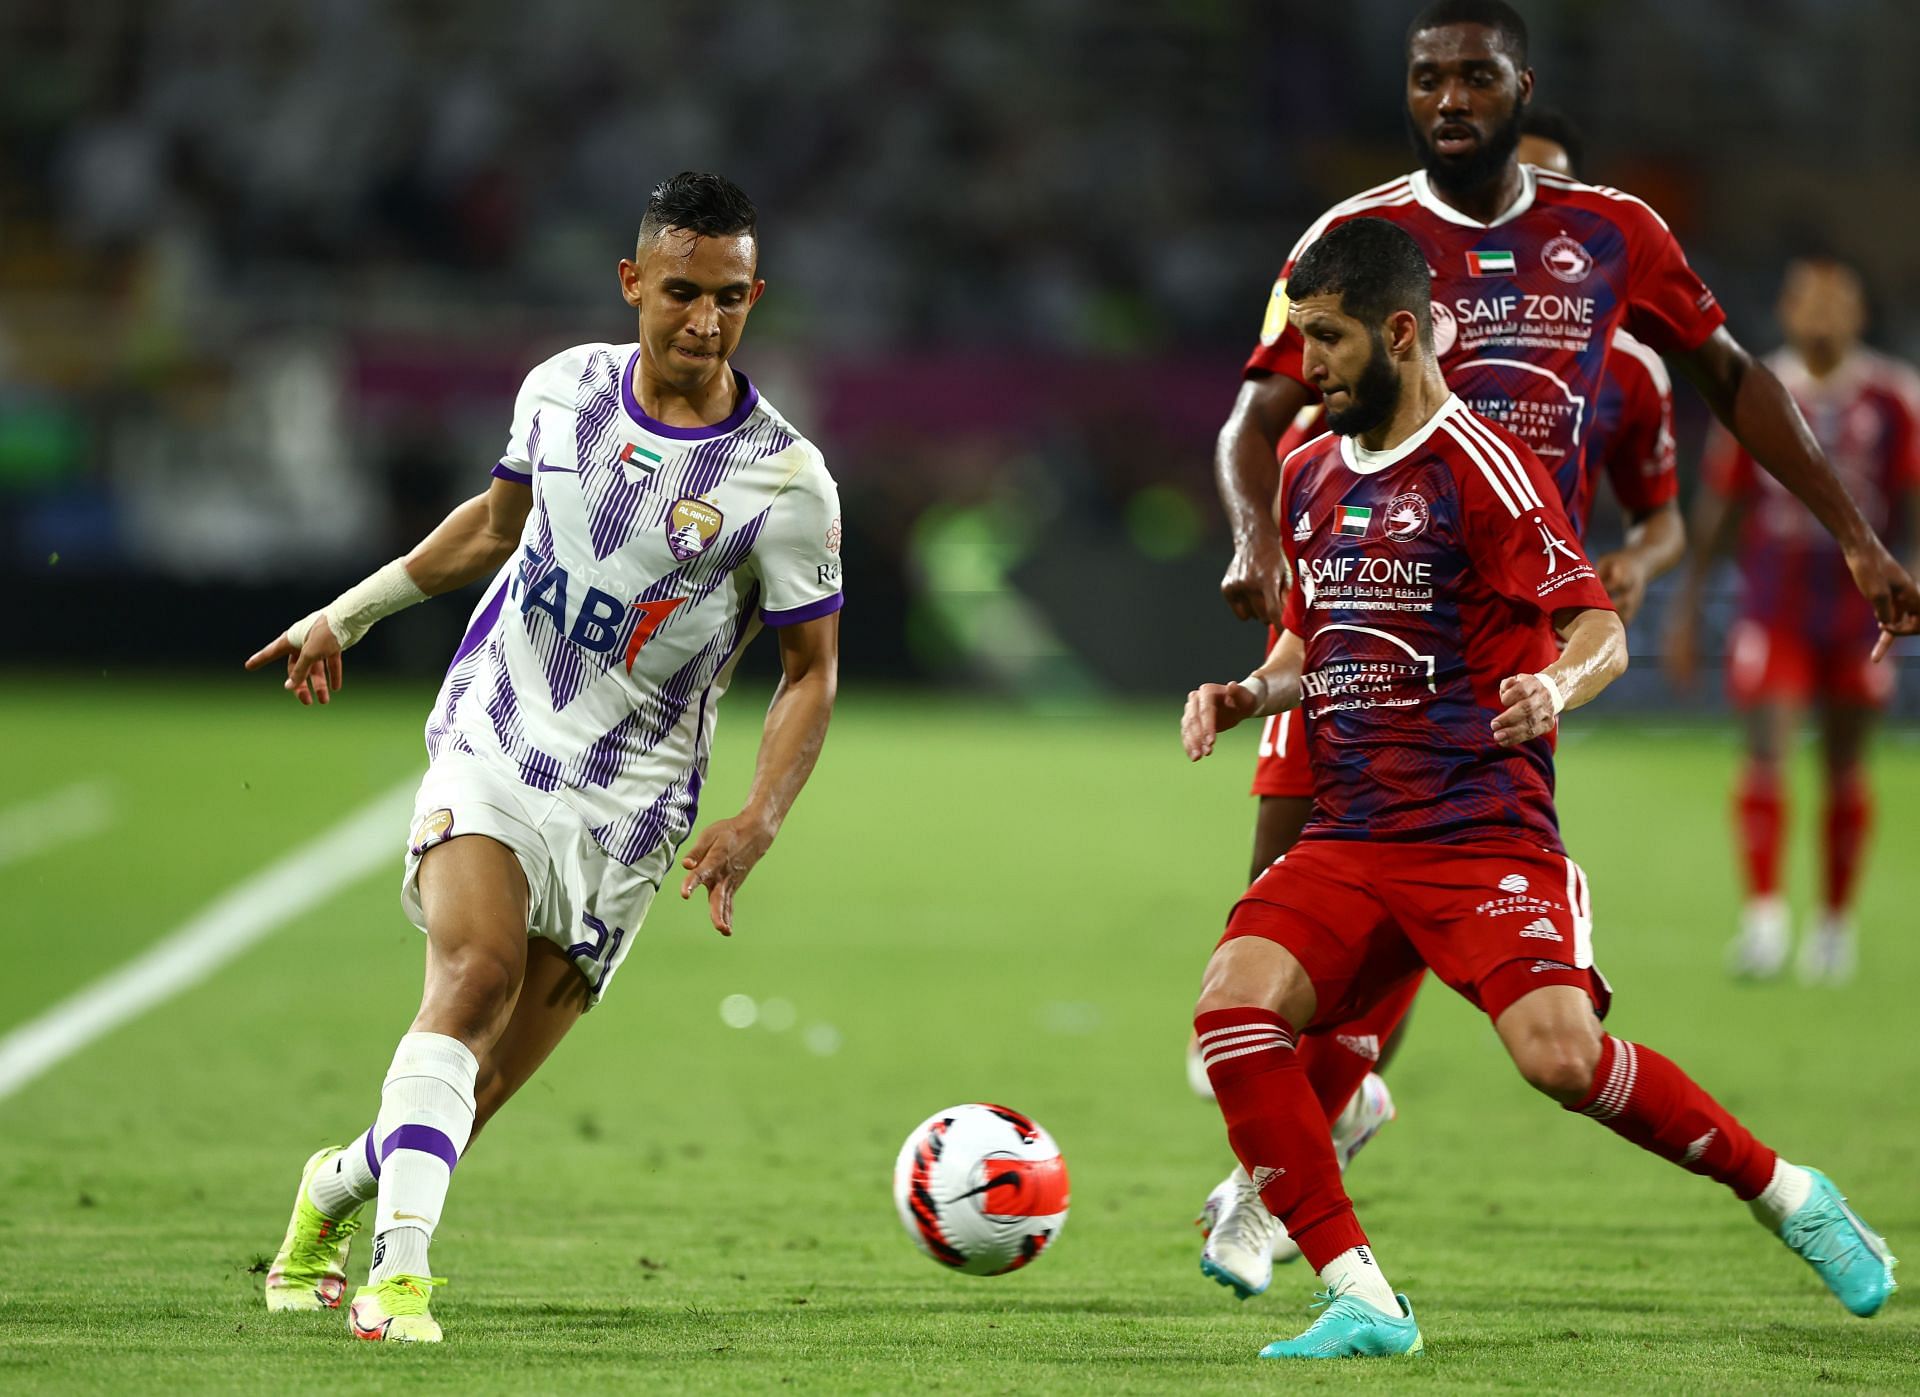 Al Ain FC v Sharjah - ADIB Cup Final